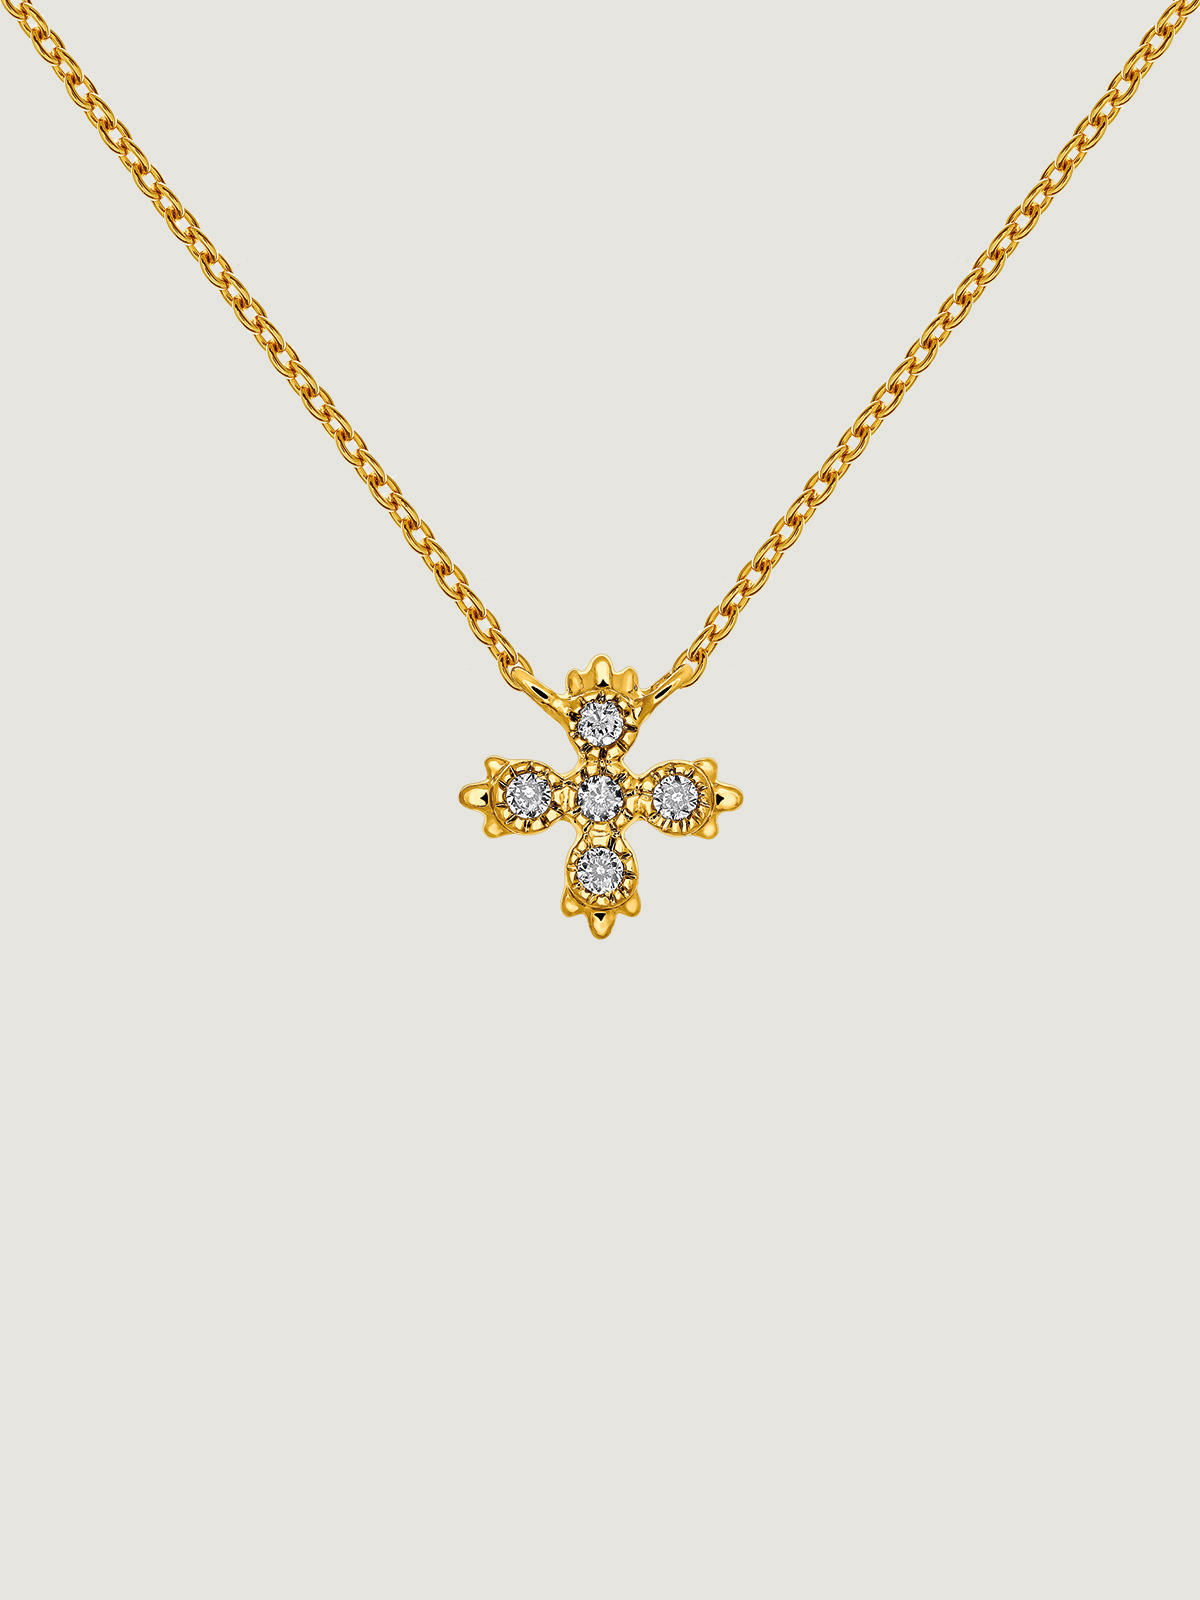 Pendentif en or jaune 18K avec croix de diamants